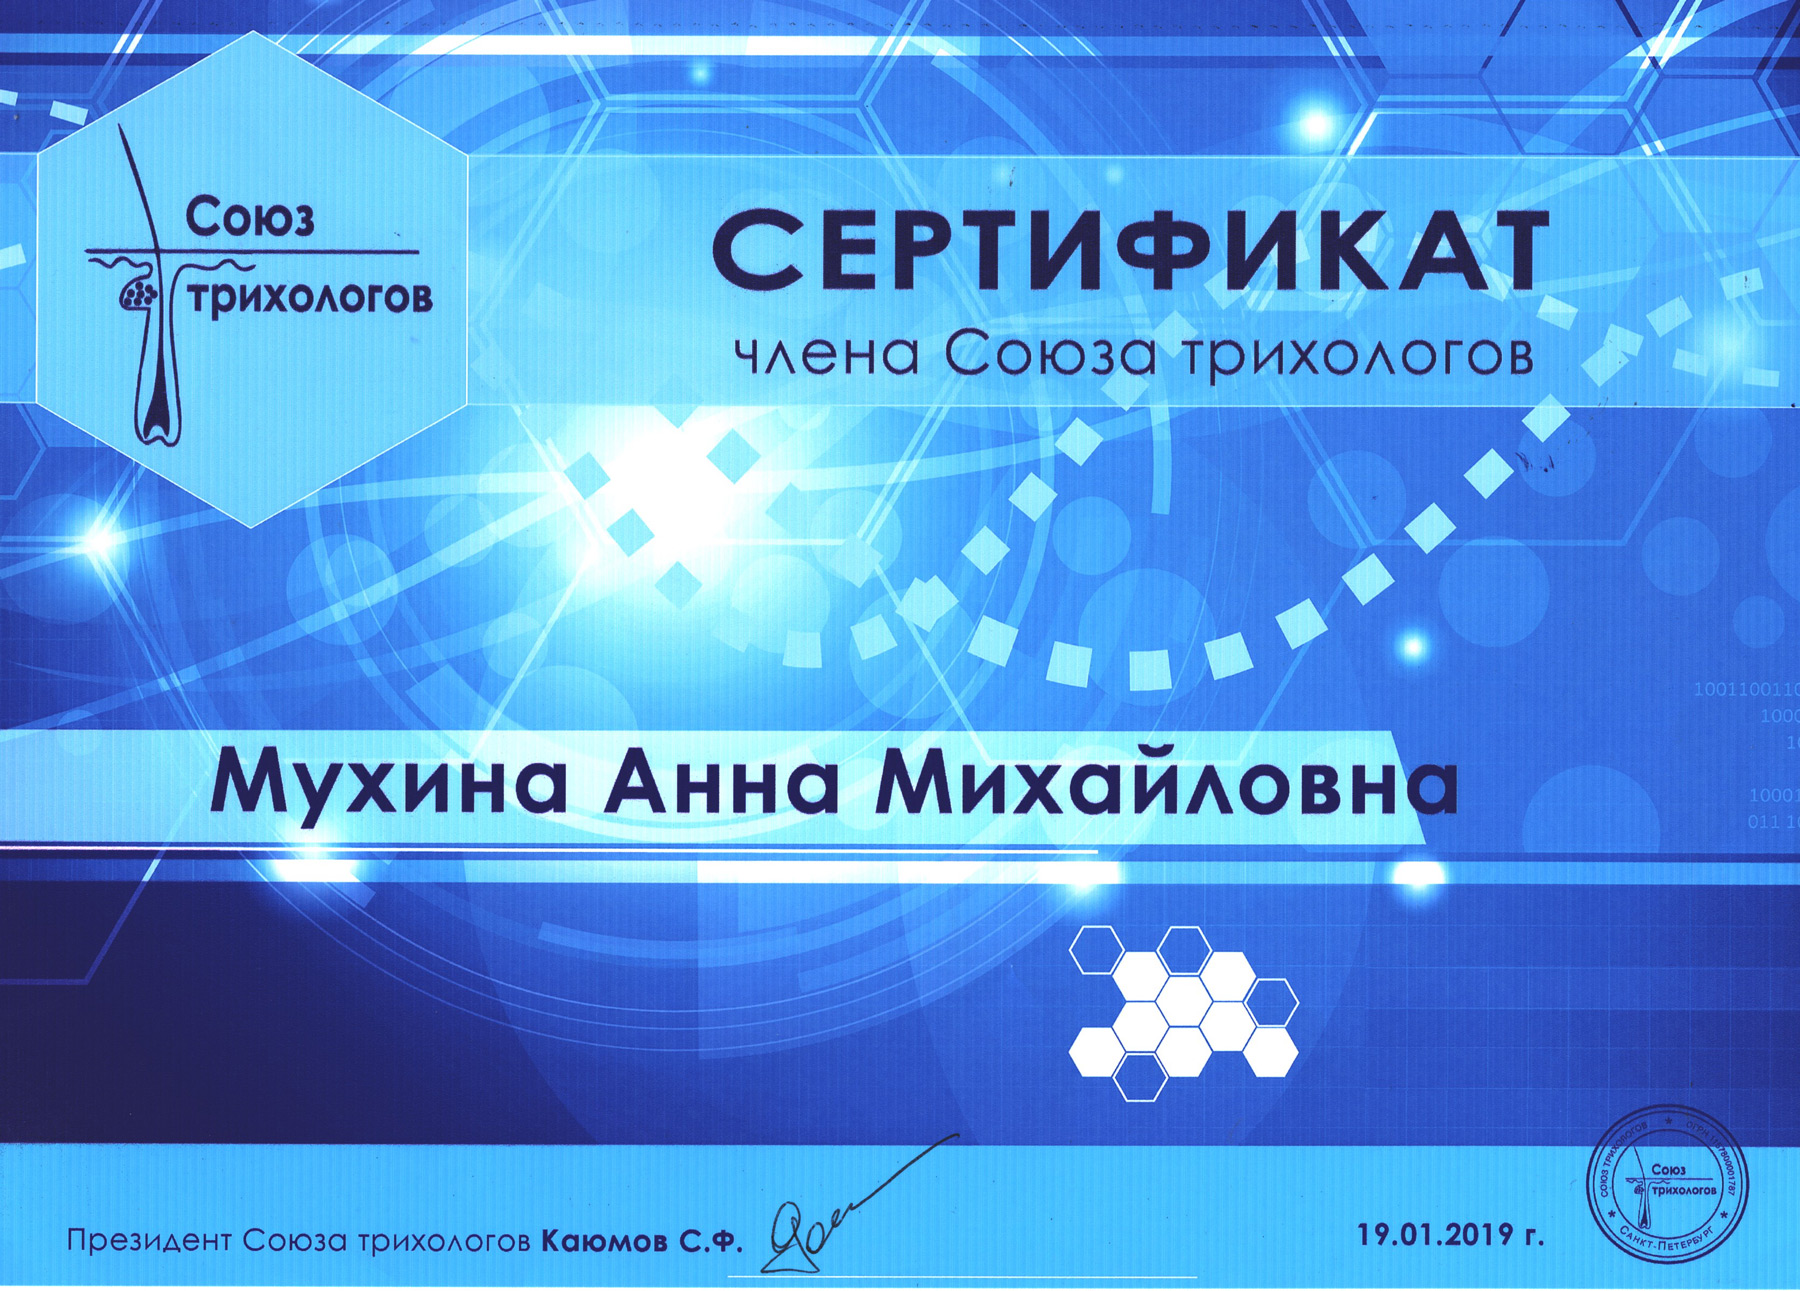 Сертификат — Член Союза трихологов. Мухина Анна Михайловна